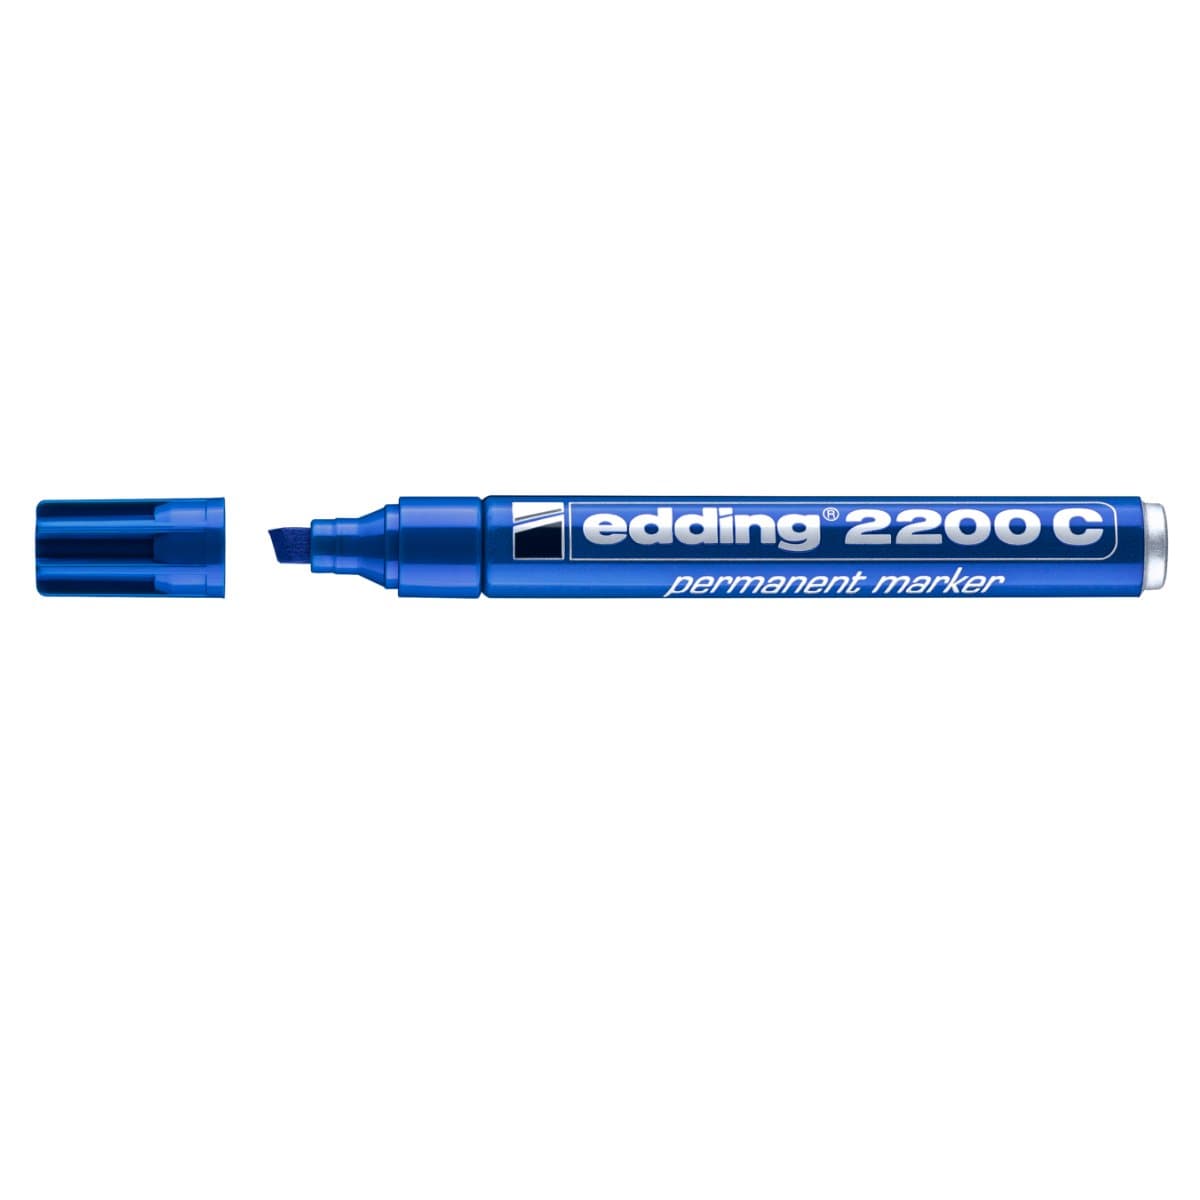 edding 2200C Permanent Marker, 1-5mm Chisel Tip, Blue